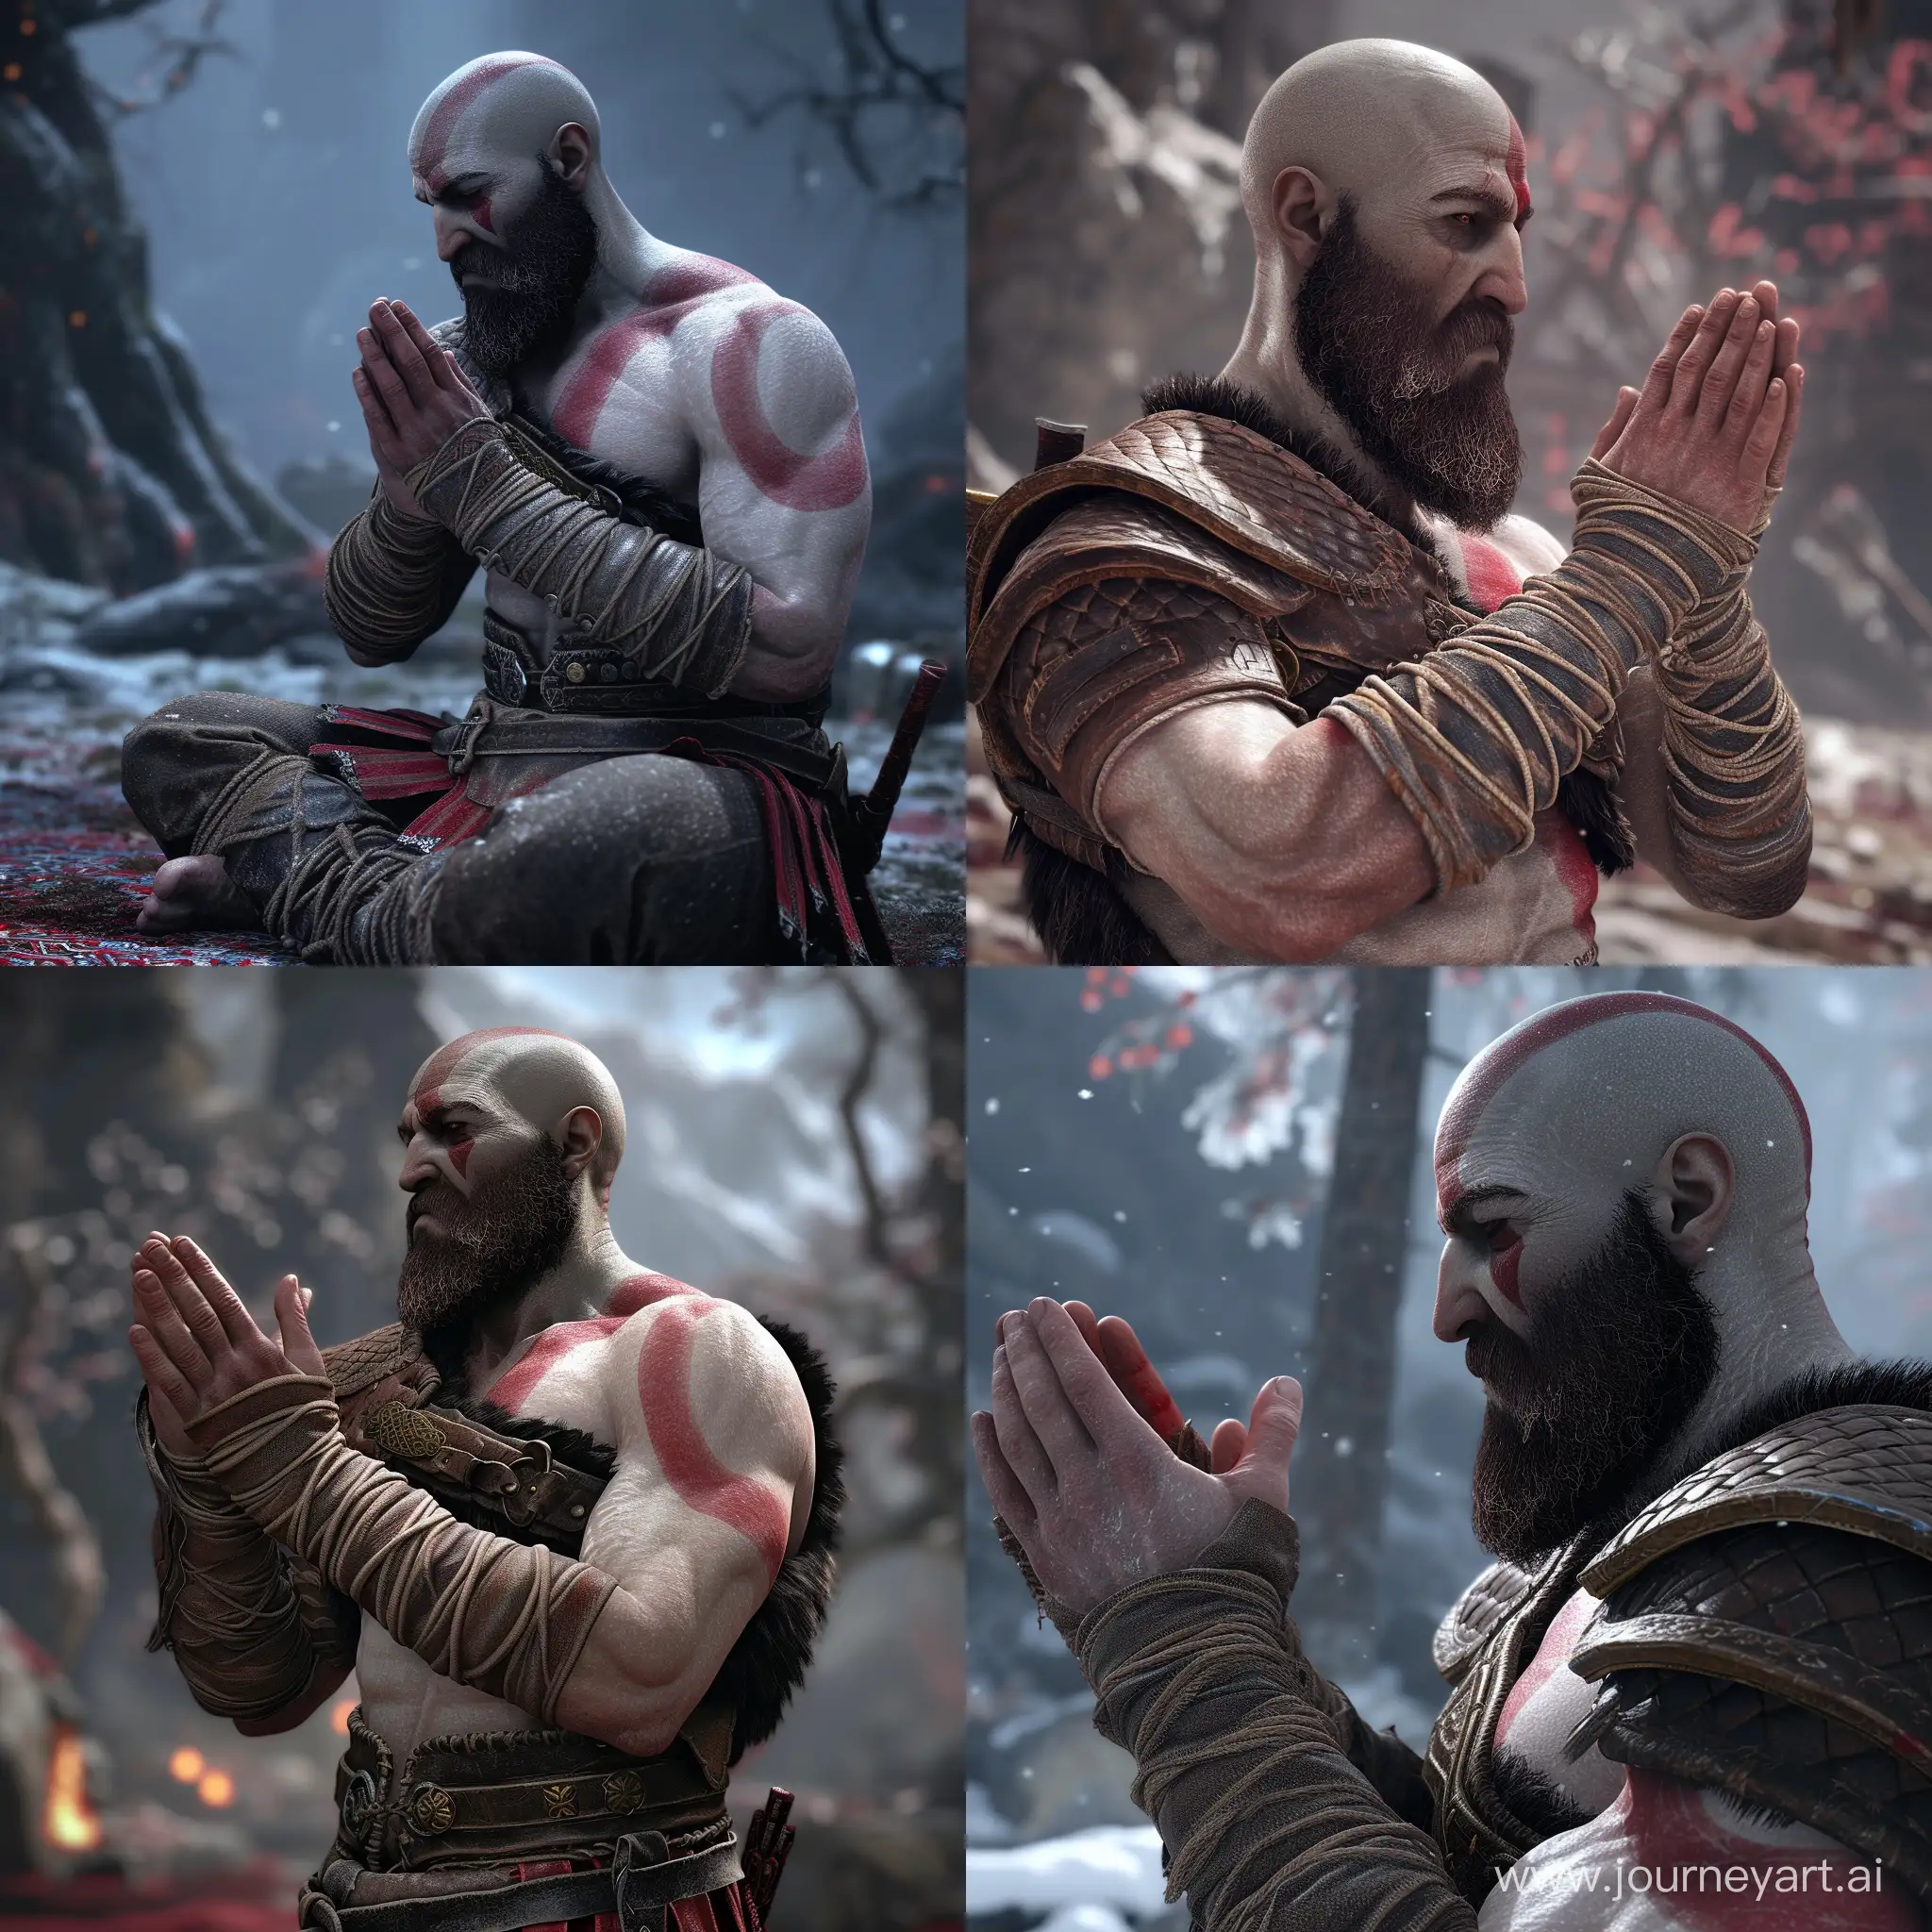 Kratos-the-God-of-War-in-Prayer-to-Allah